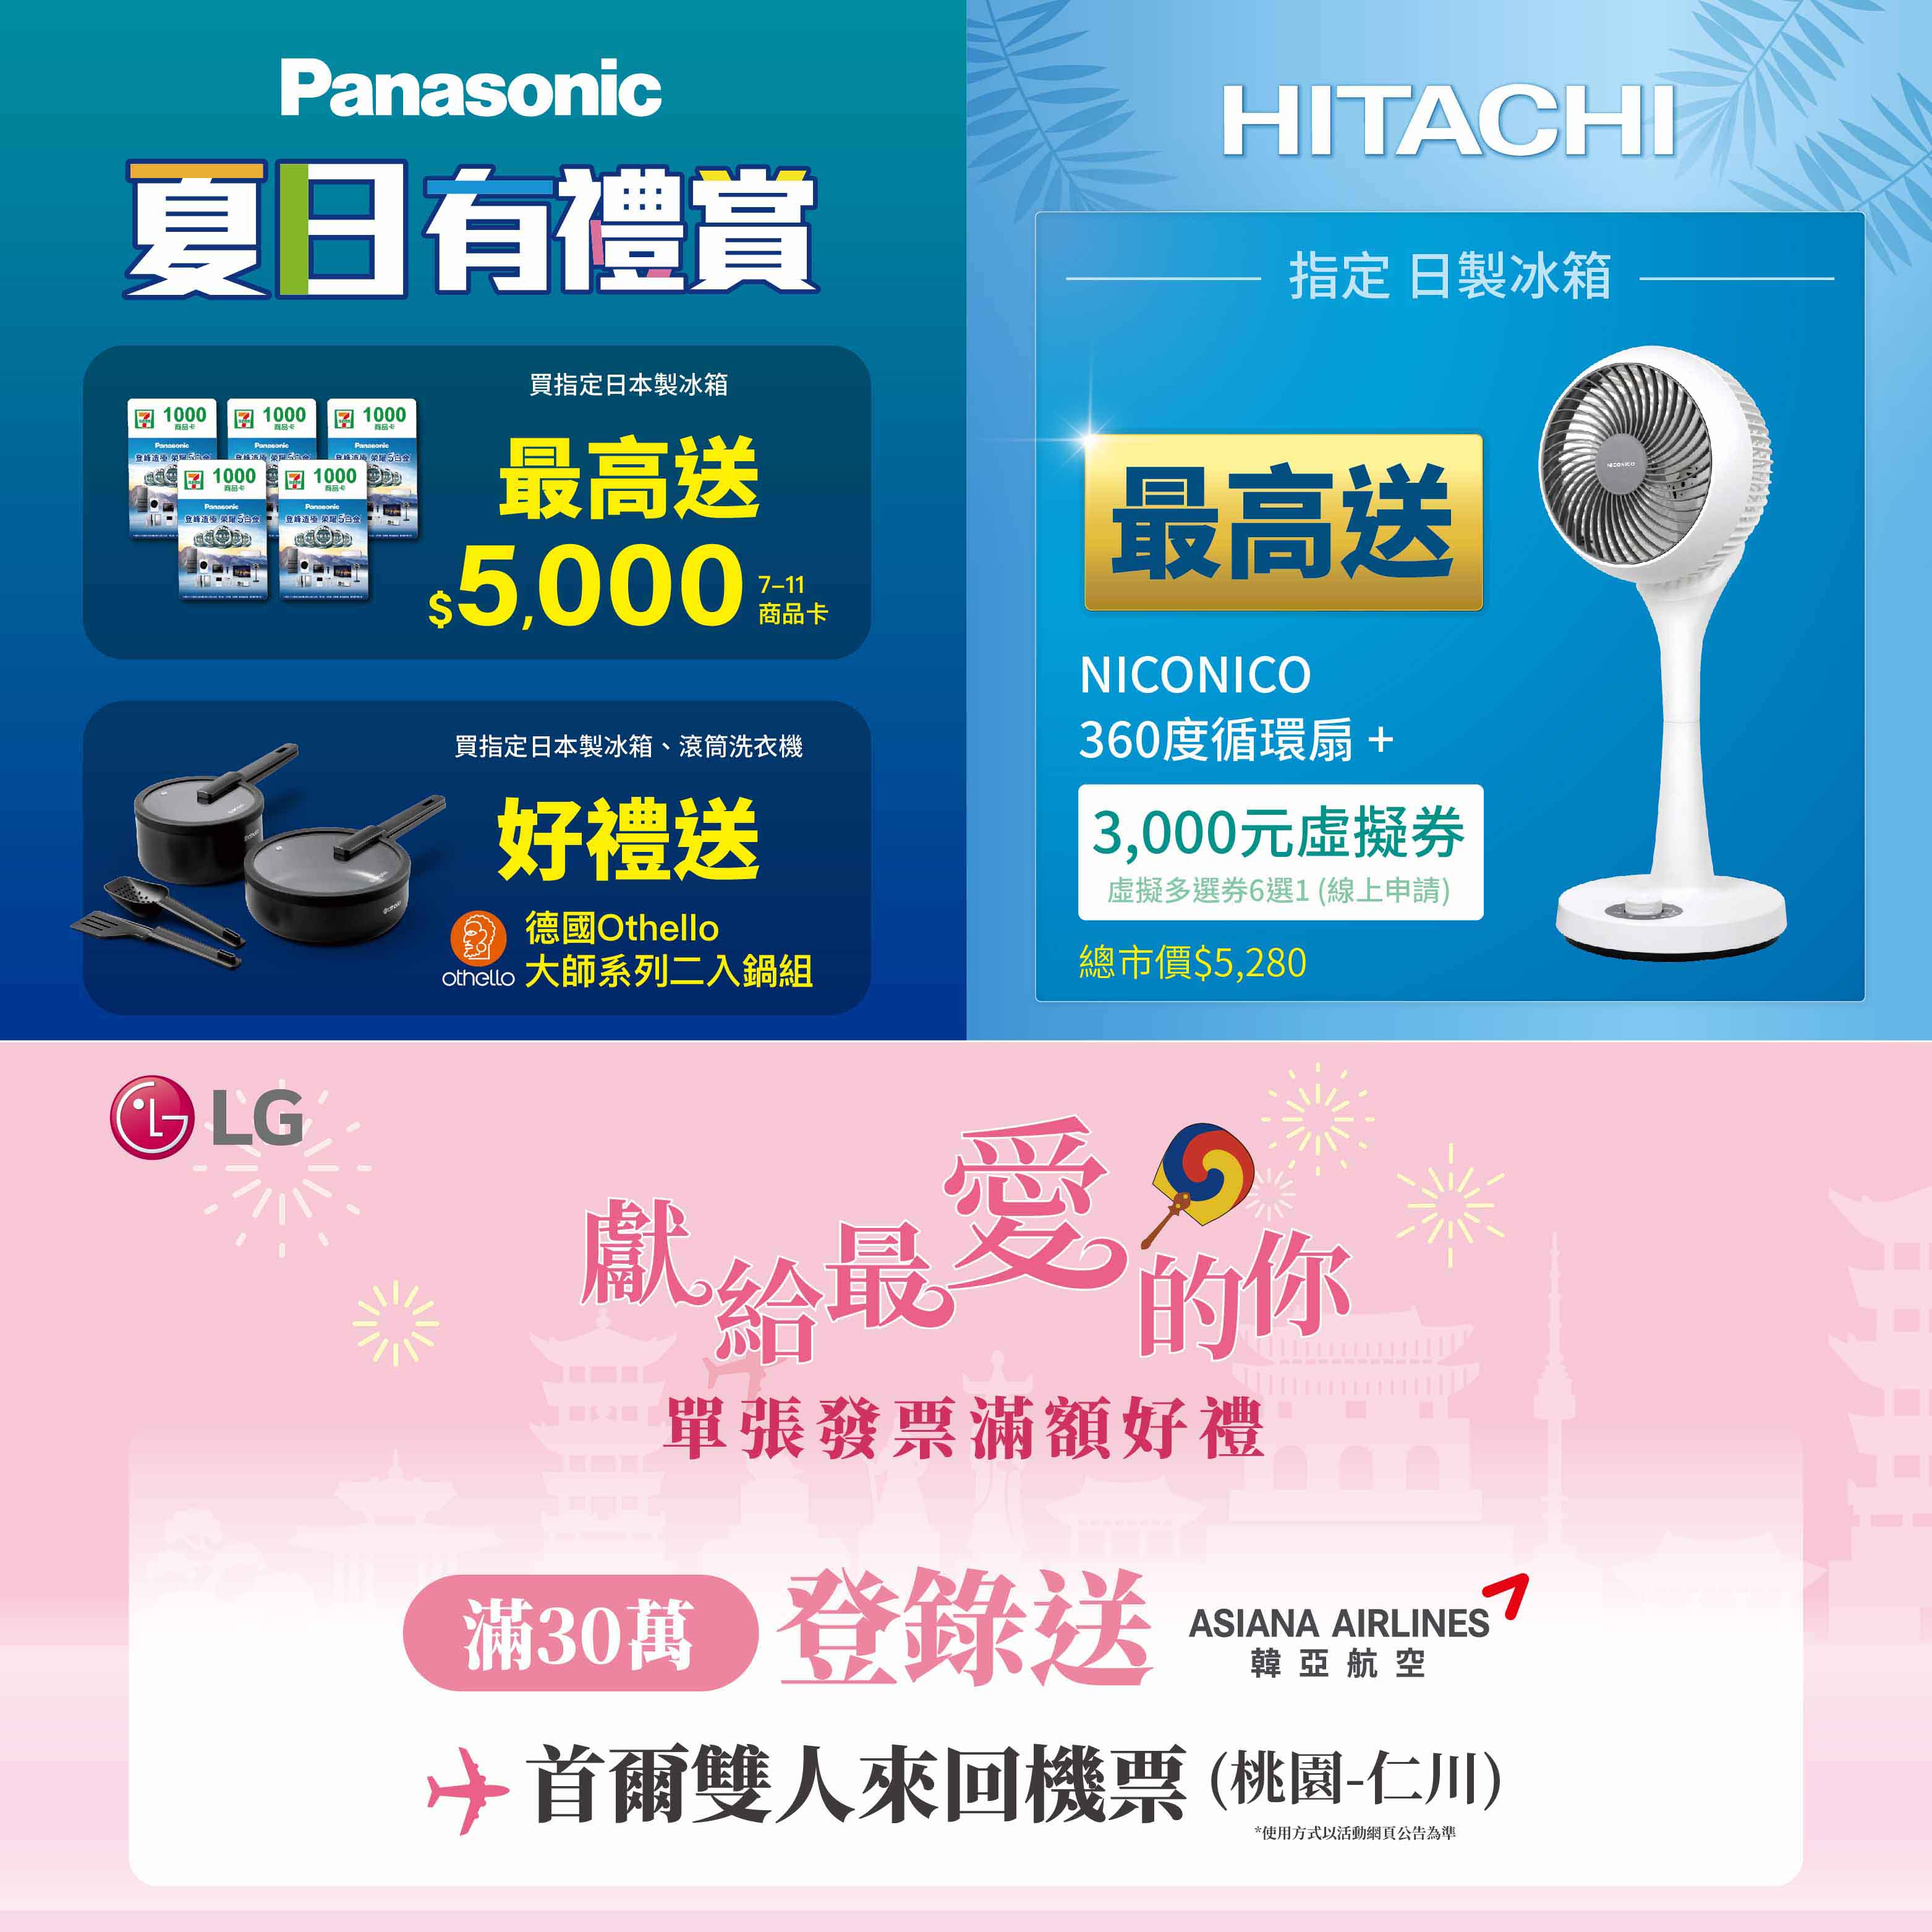 Panasonic/Hitachi/LG